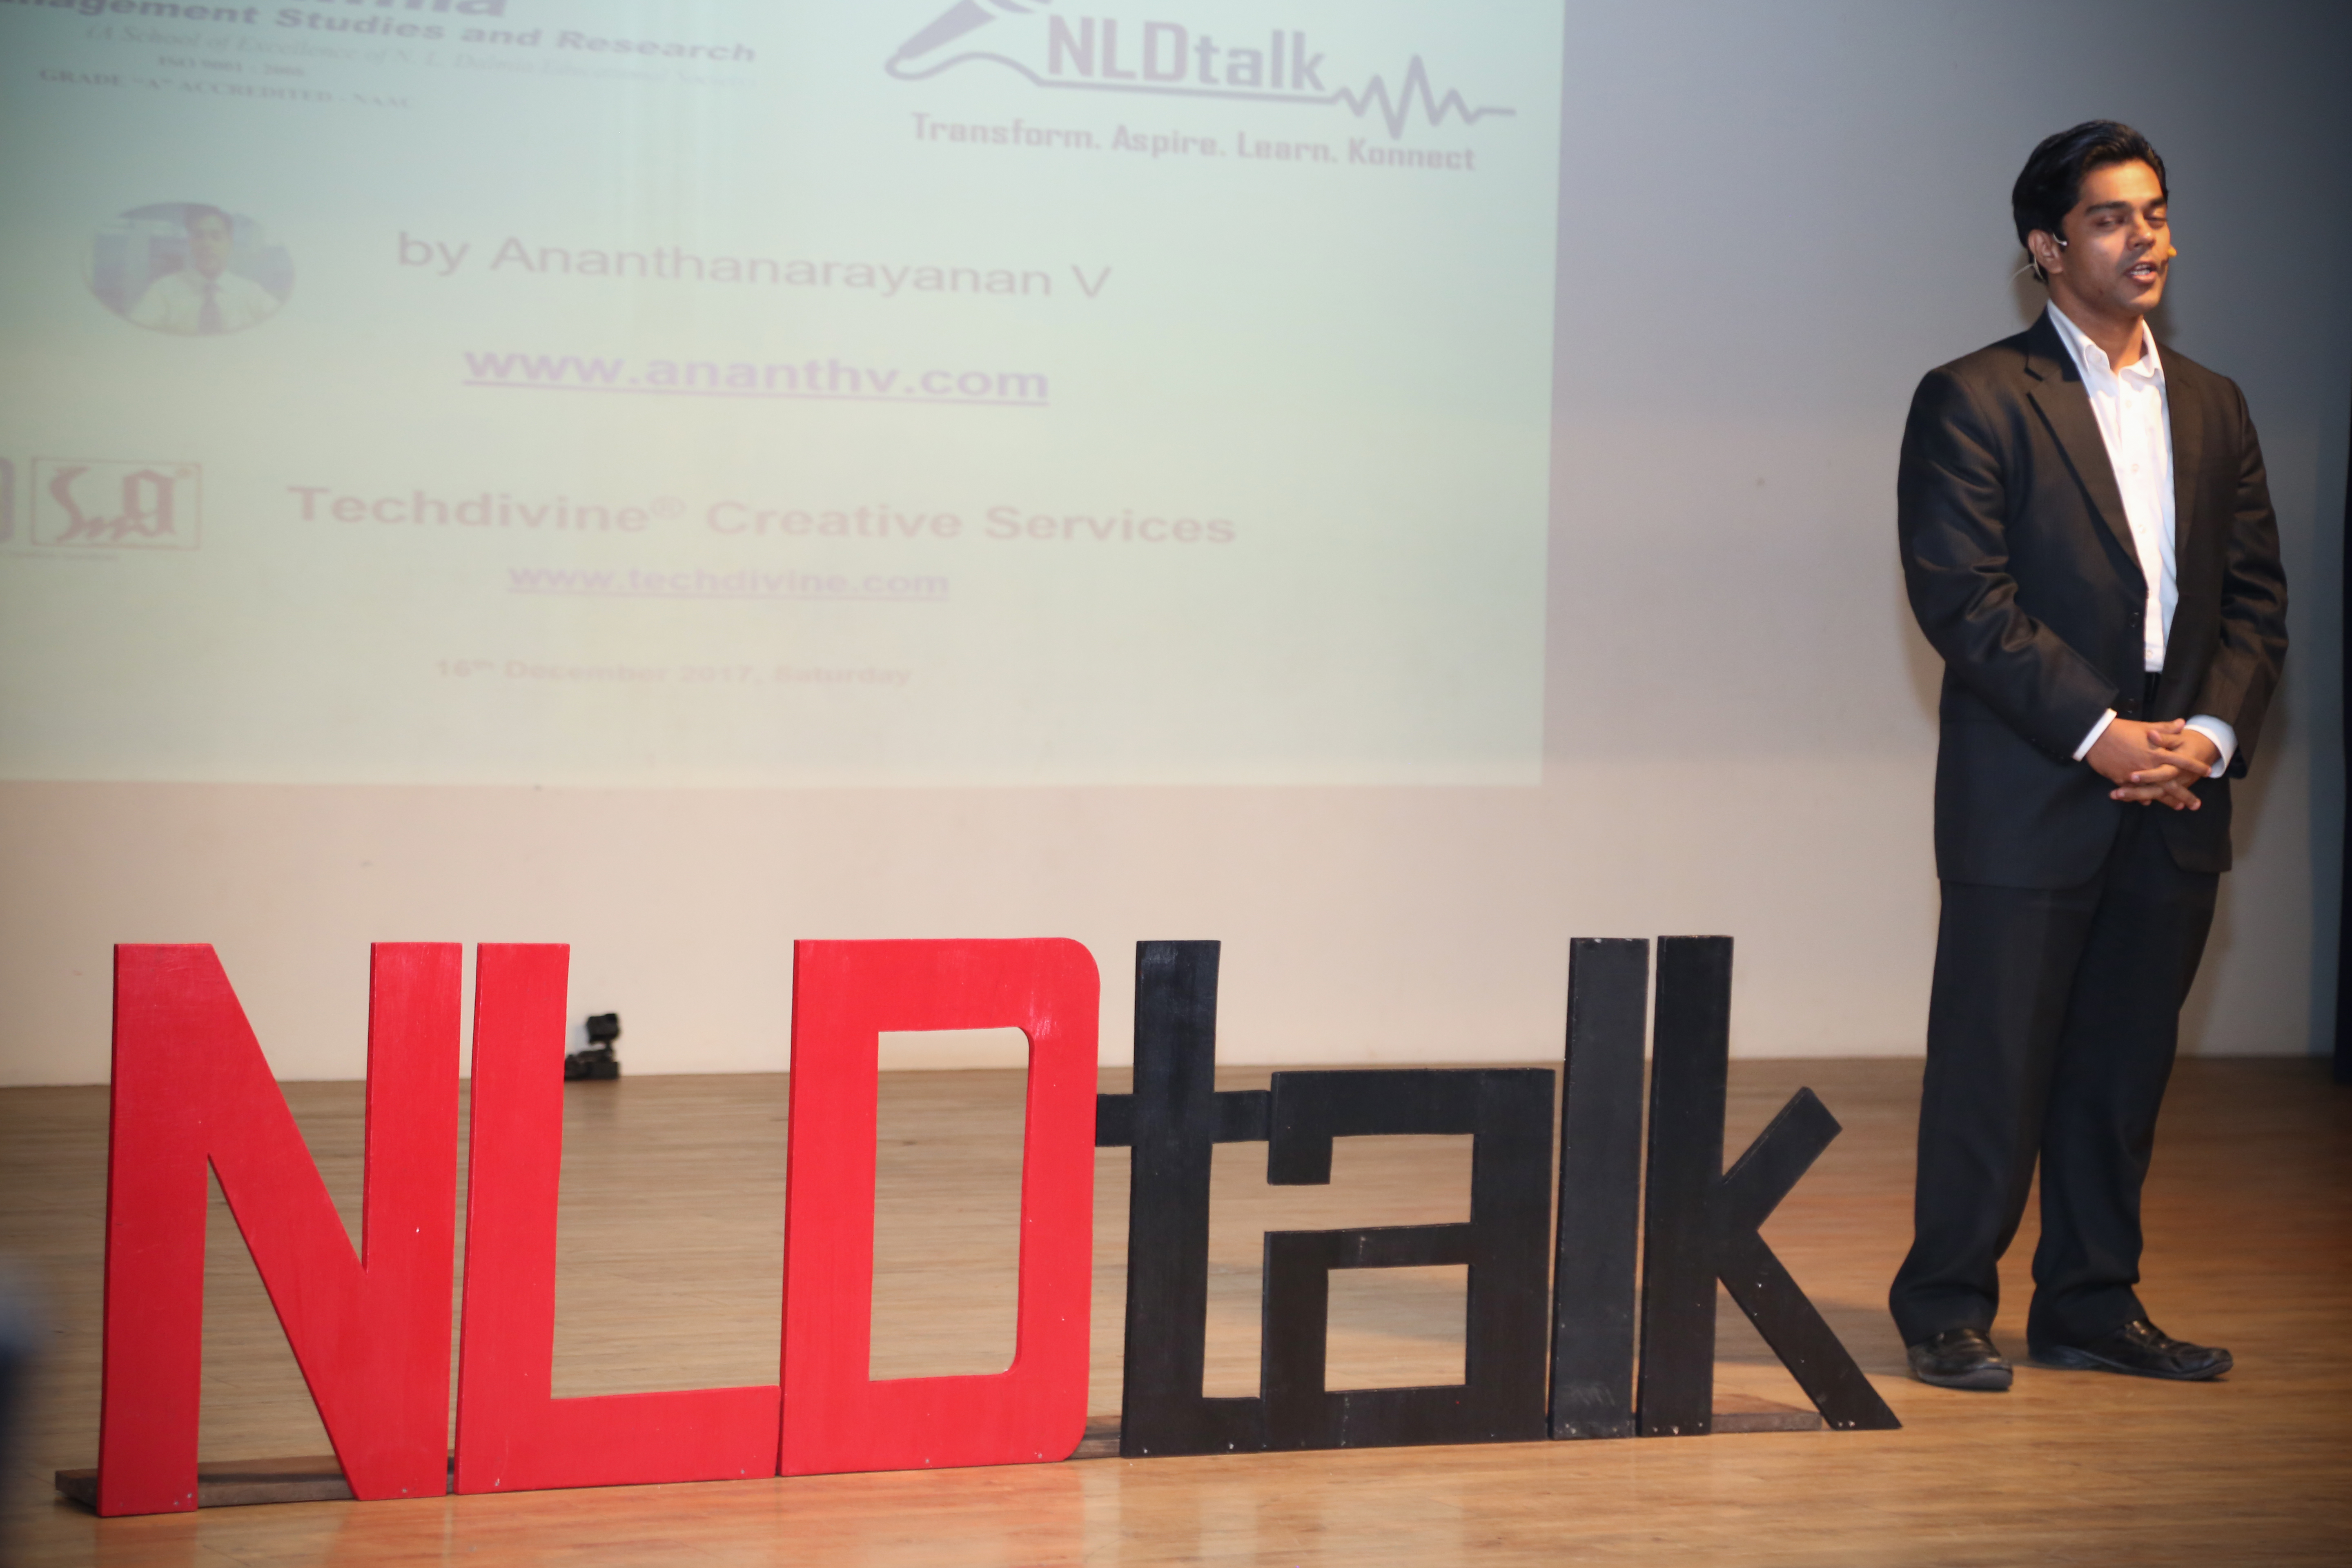 Speaker Ananth V NLD Talk #NLDTalk Careers Students MBA Inspire Motivate Entrepreneur NL Dalmia Institute of Management Studies and Research